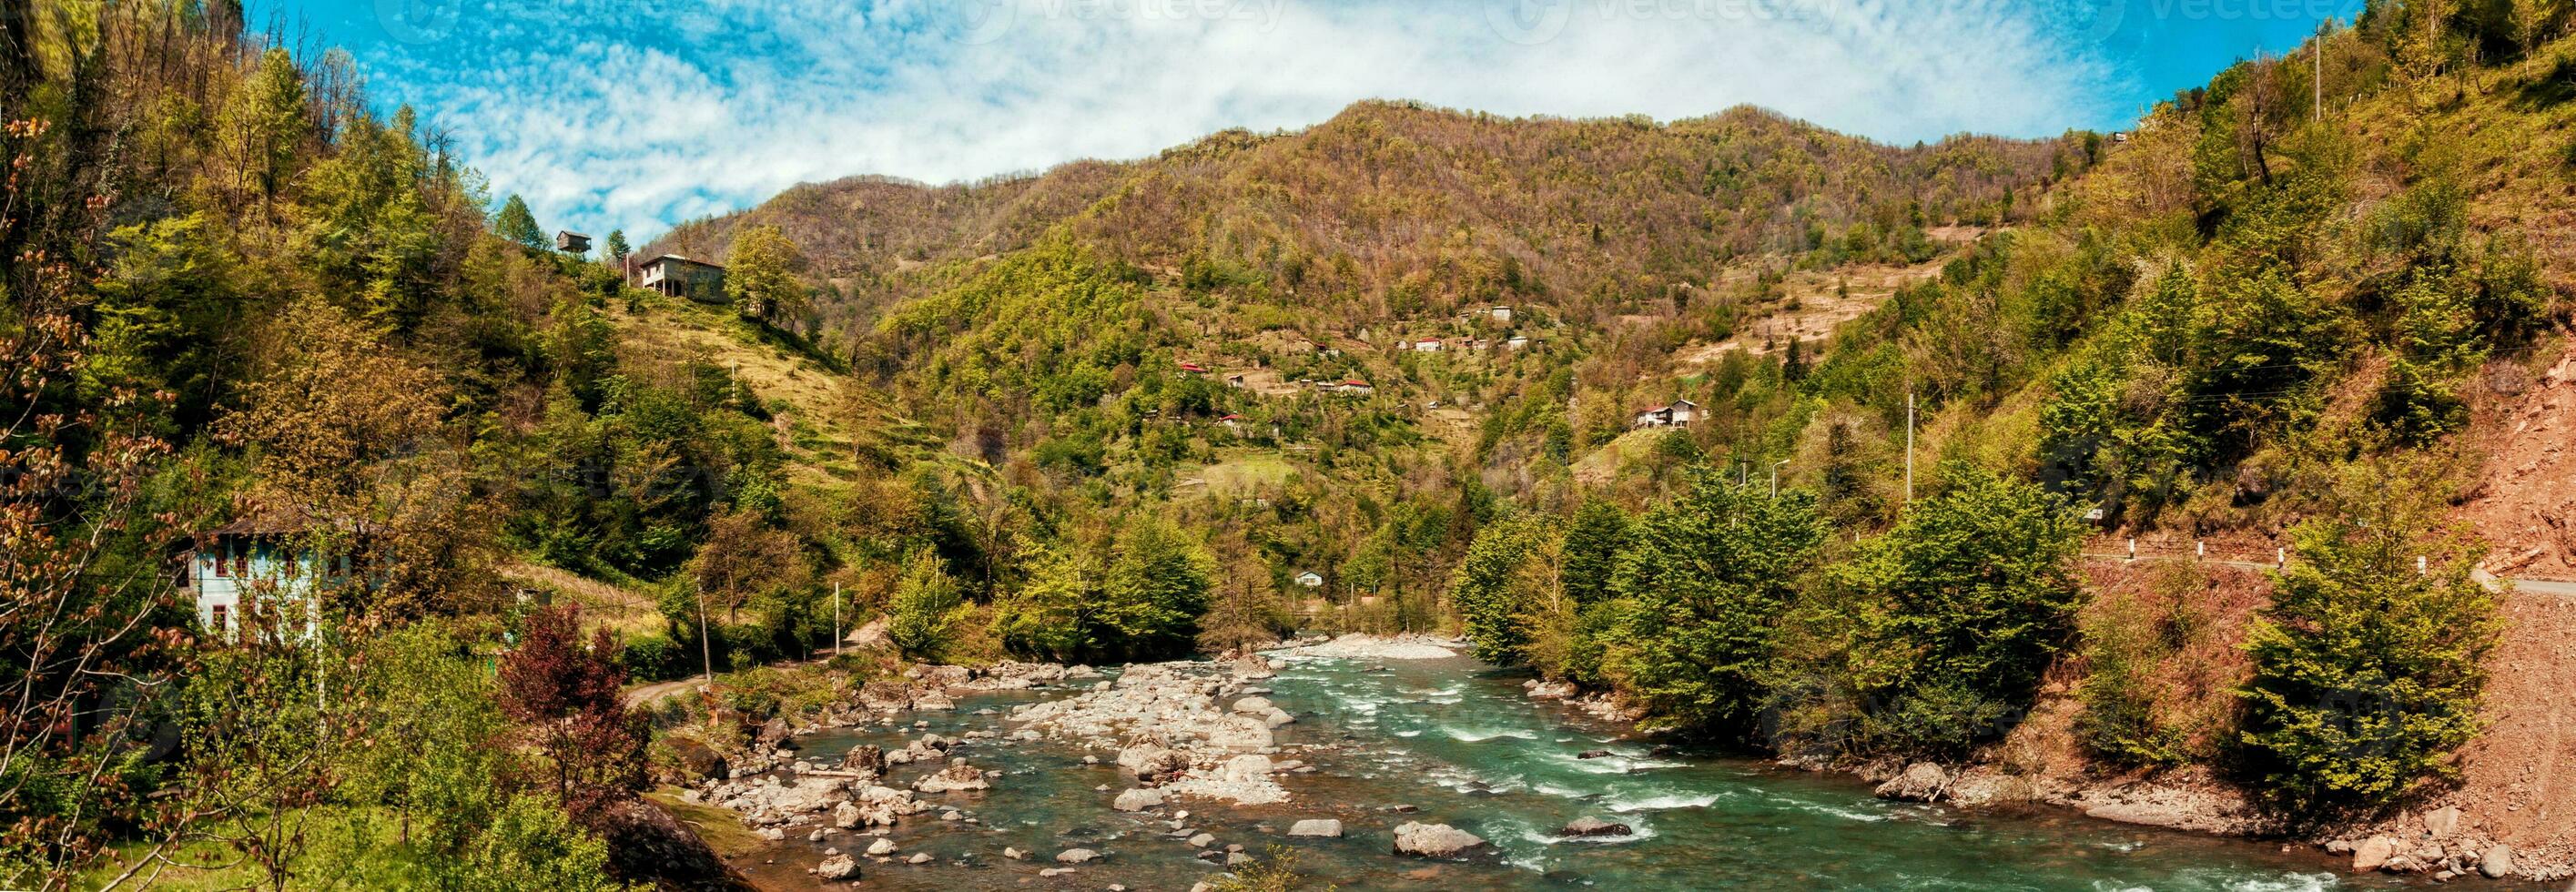 paisaje en el montañas, ajara, georgia.caucaso foto